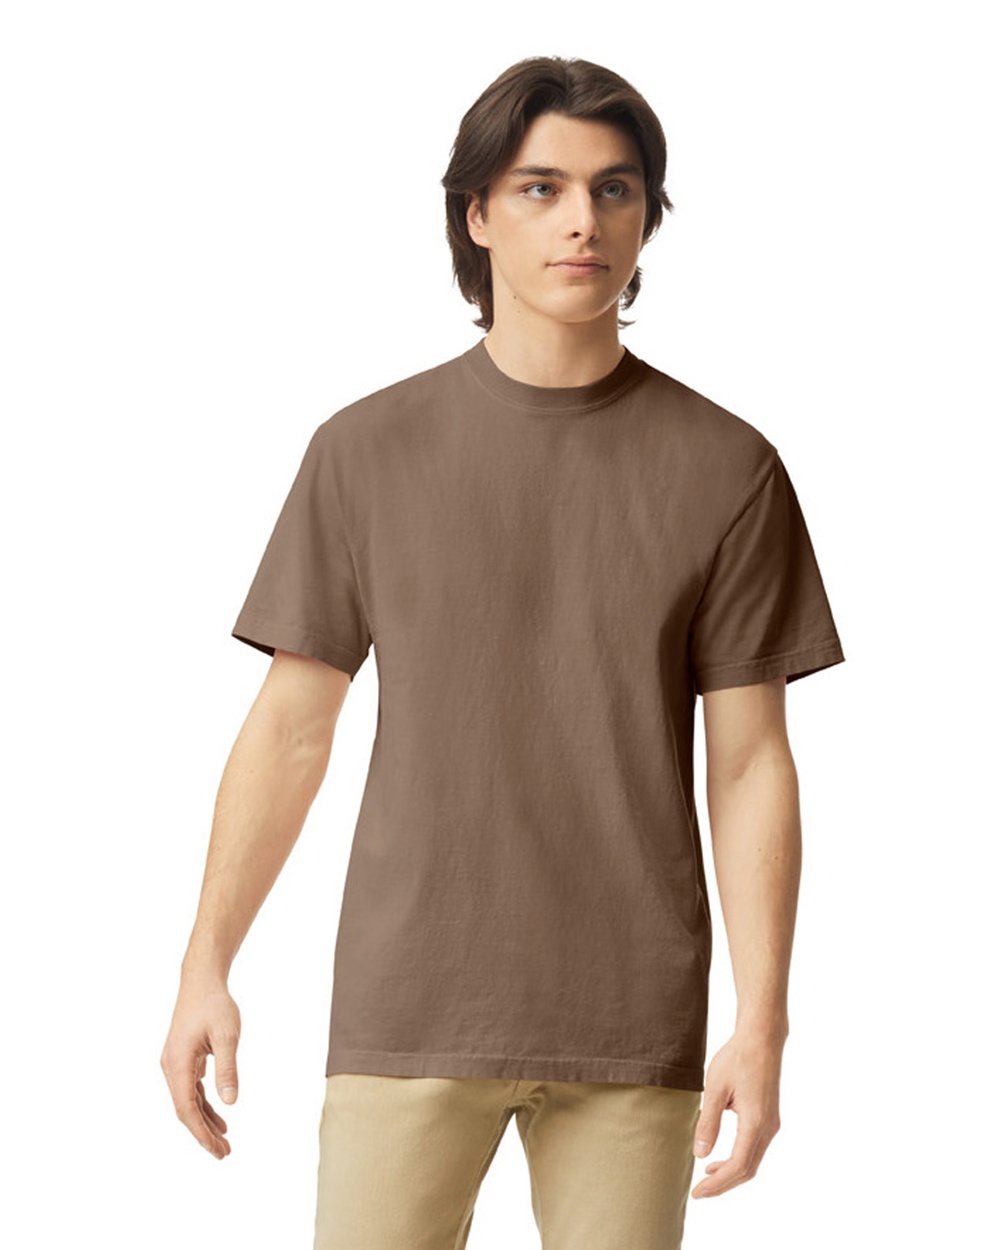 Comfort Colors 1717 Garment-Dyed Heavyweight T-Shirt - Hydrangea